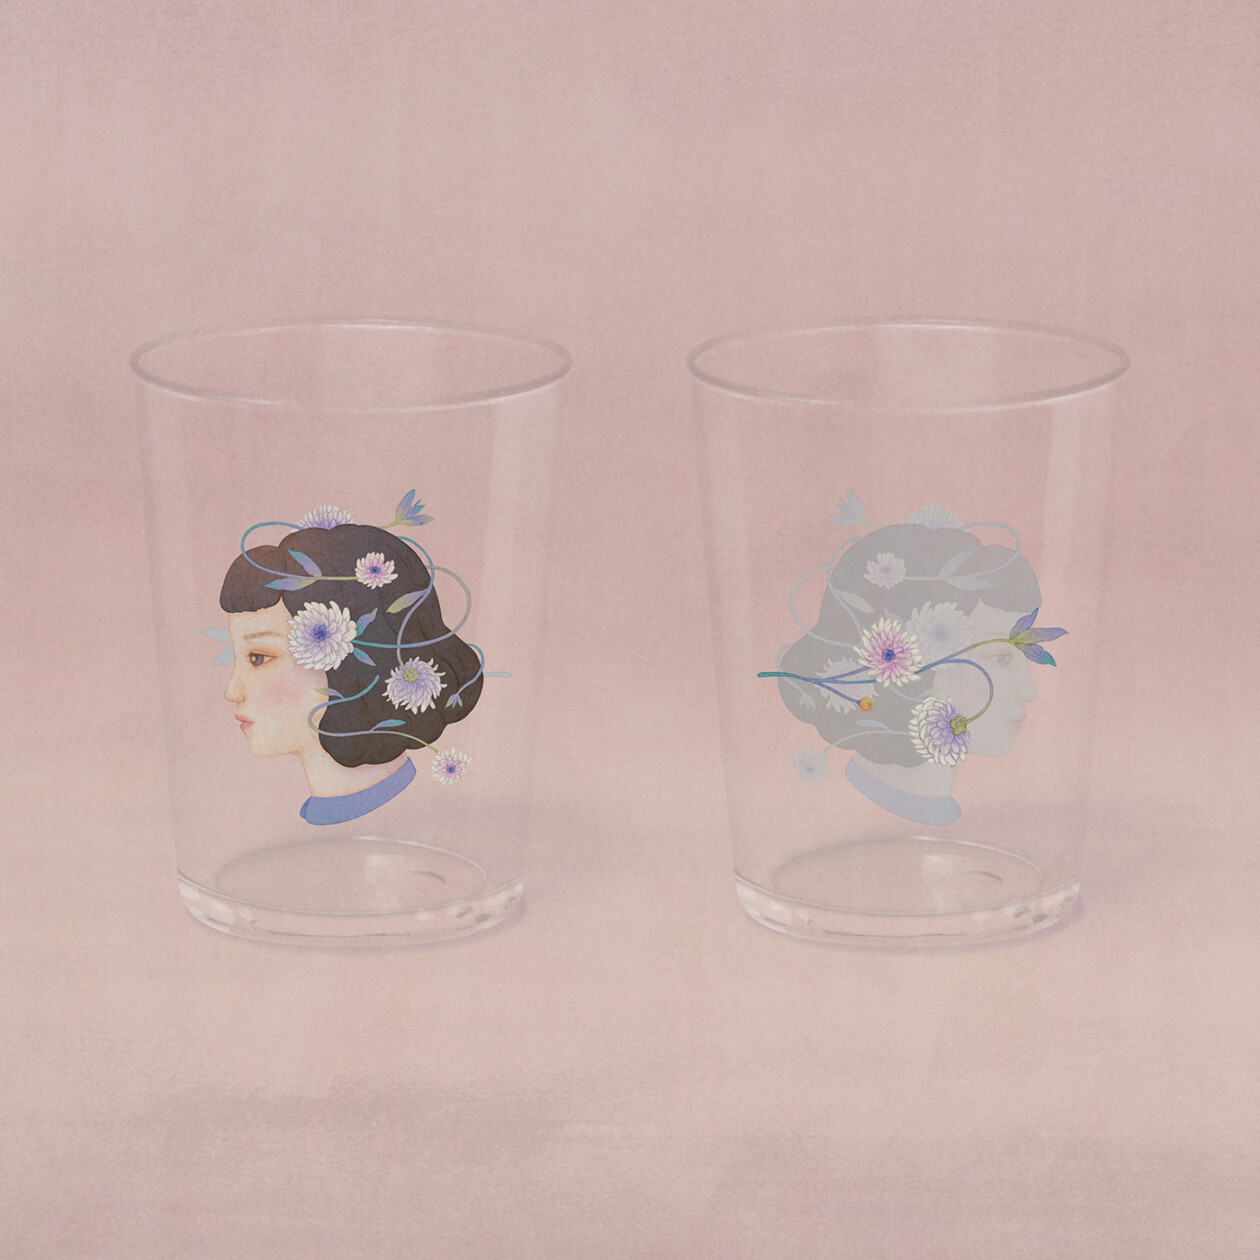 Delicately Illustrated Glassware By Whooli Chen And Di Chun Chen (7)